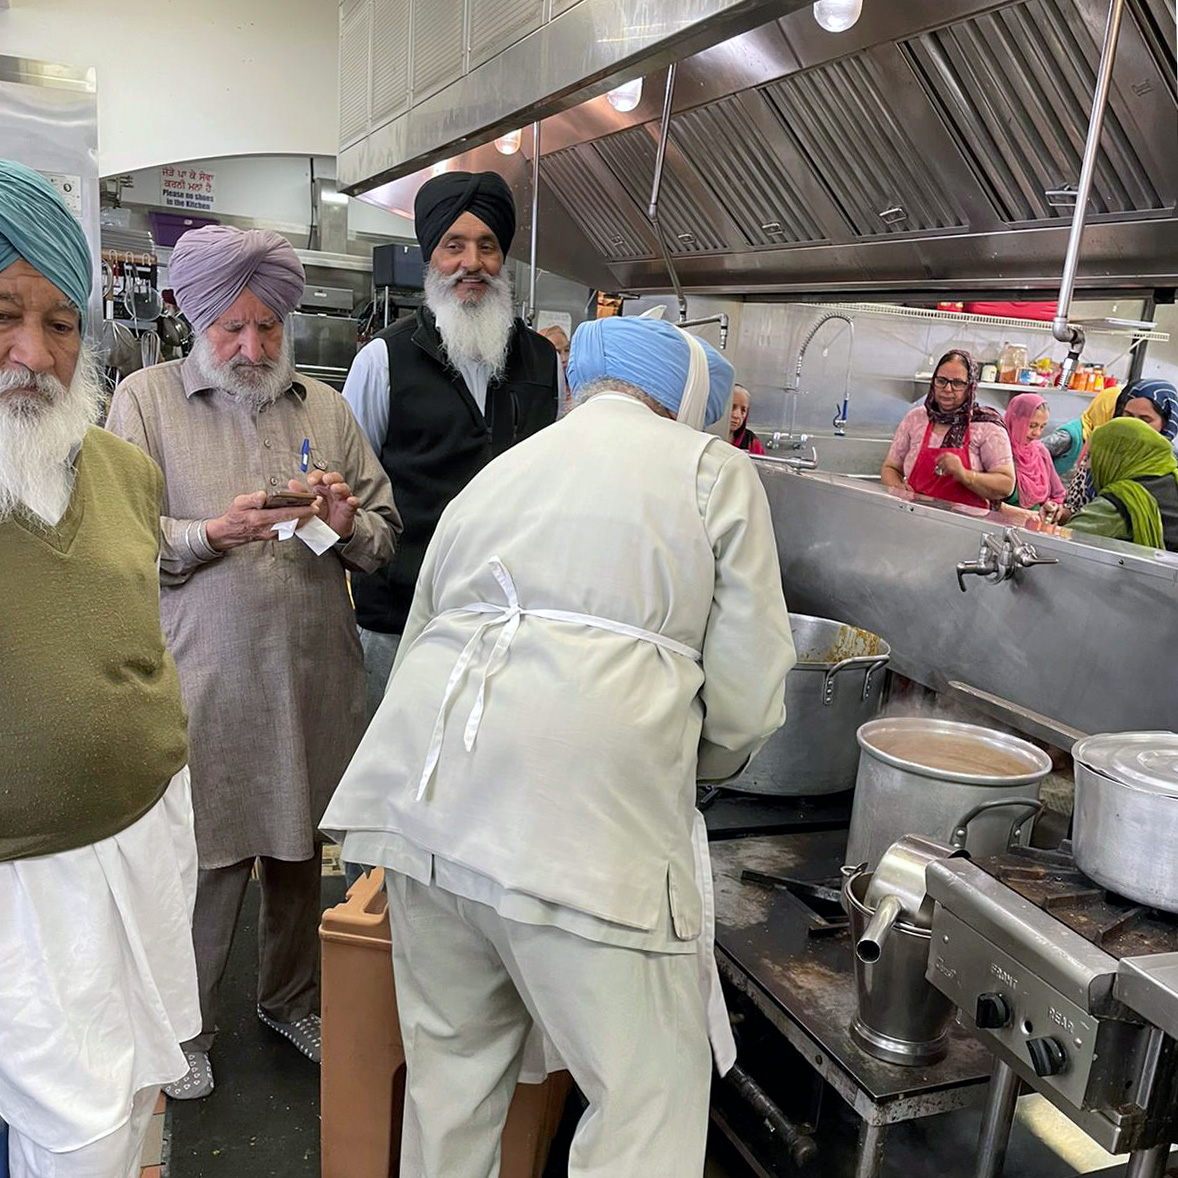 The Gurdwara Baba Banda Singh Bahadar Sikh Society donated hot chai to USJE members feeling the cold on the strike line at Matsqui yesterday. Solidarity! ਏਕਤਾ
@psac_afpc @psacbc